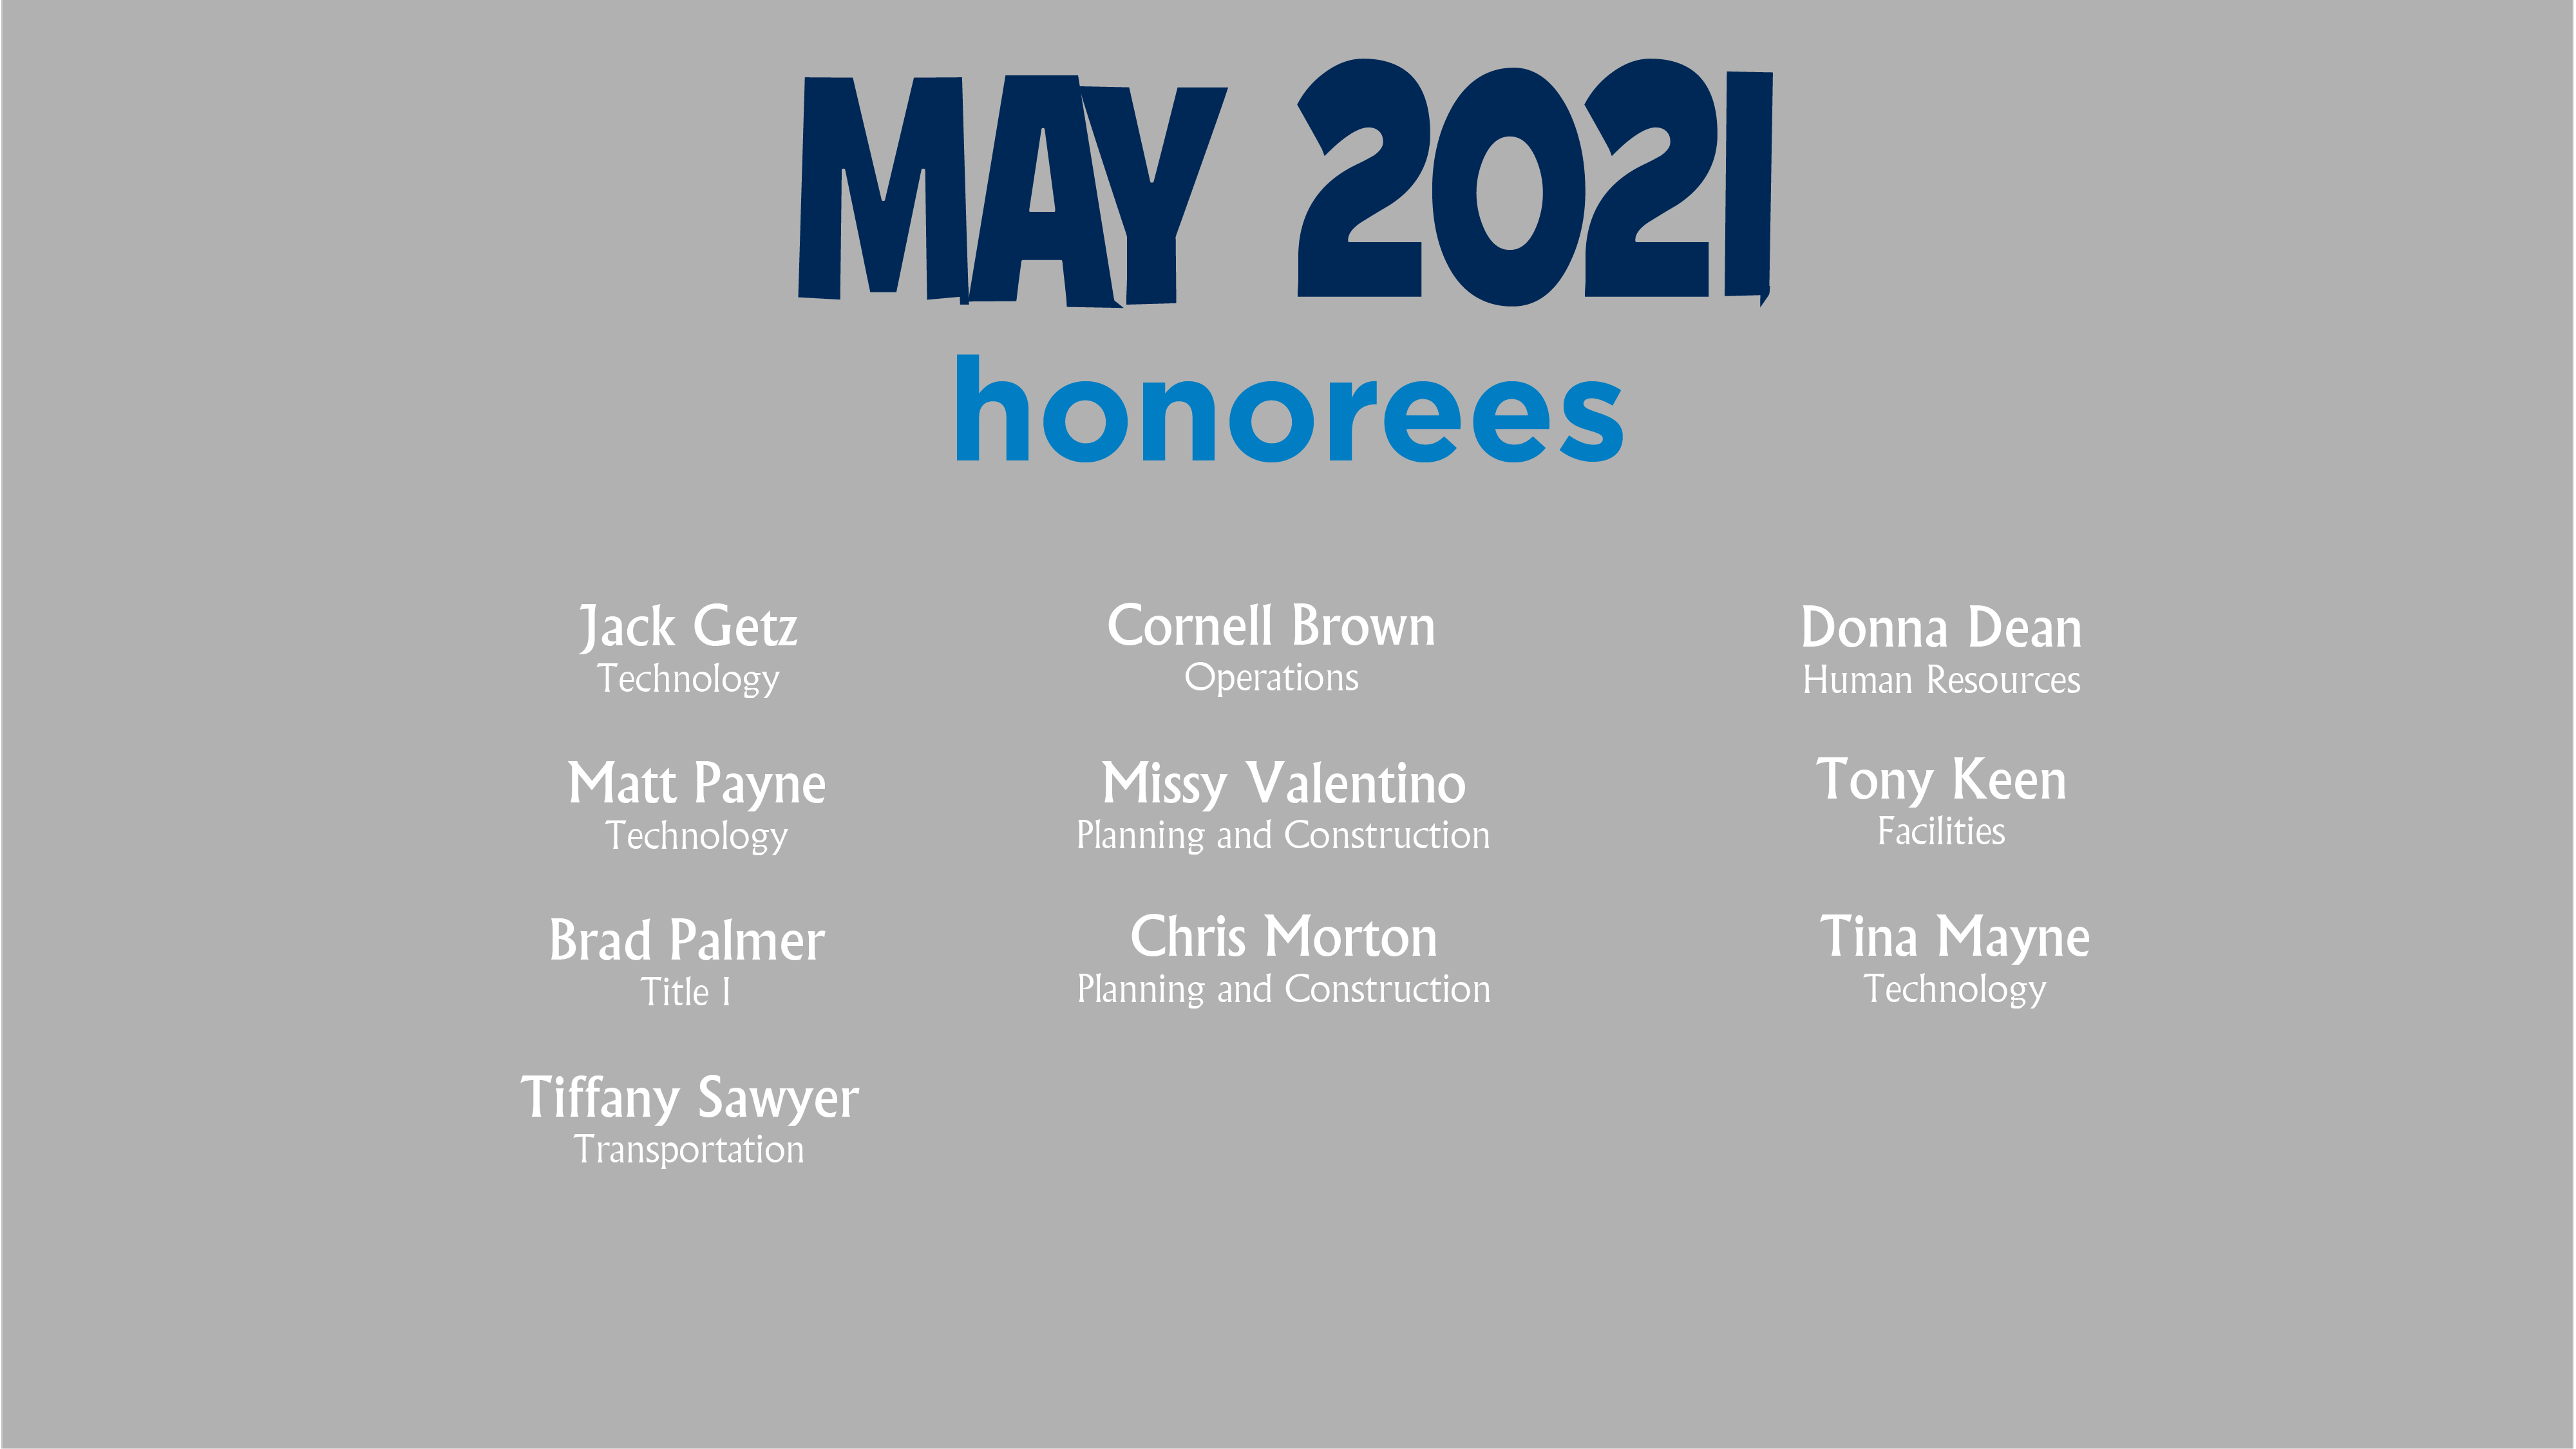 HCPS Bowtie Breakfast Honorees - May 2021